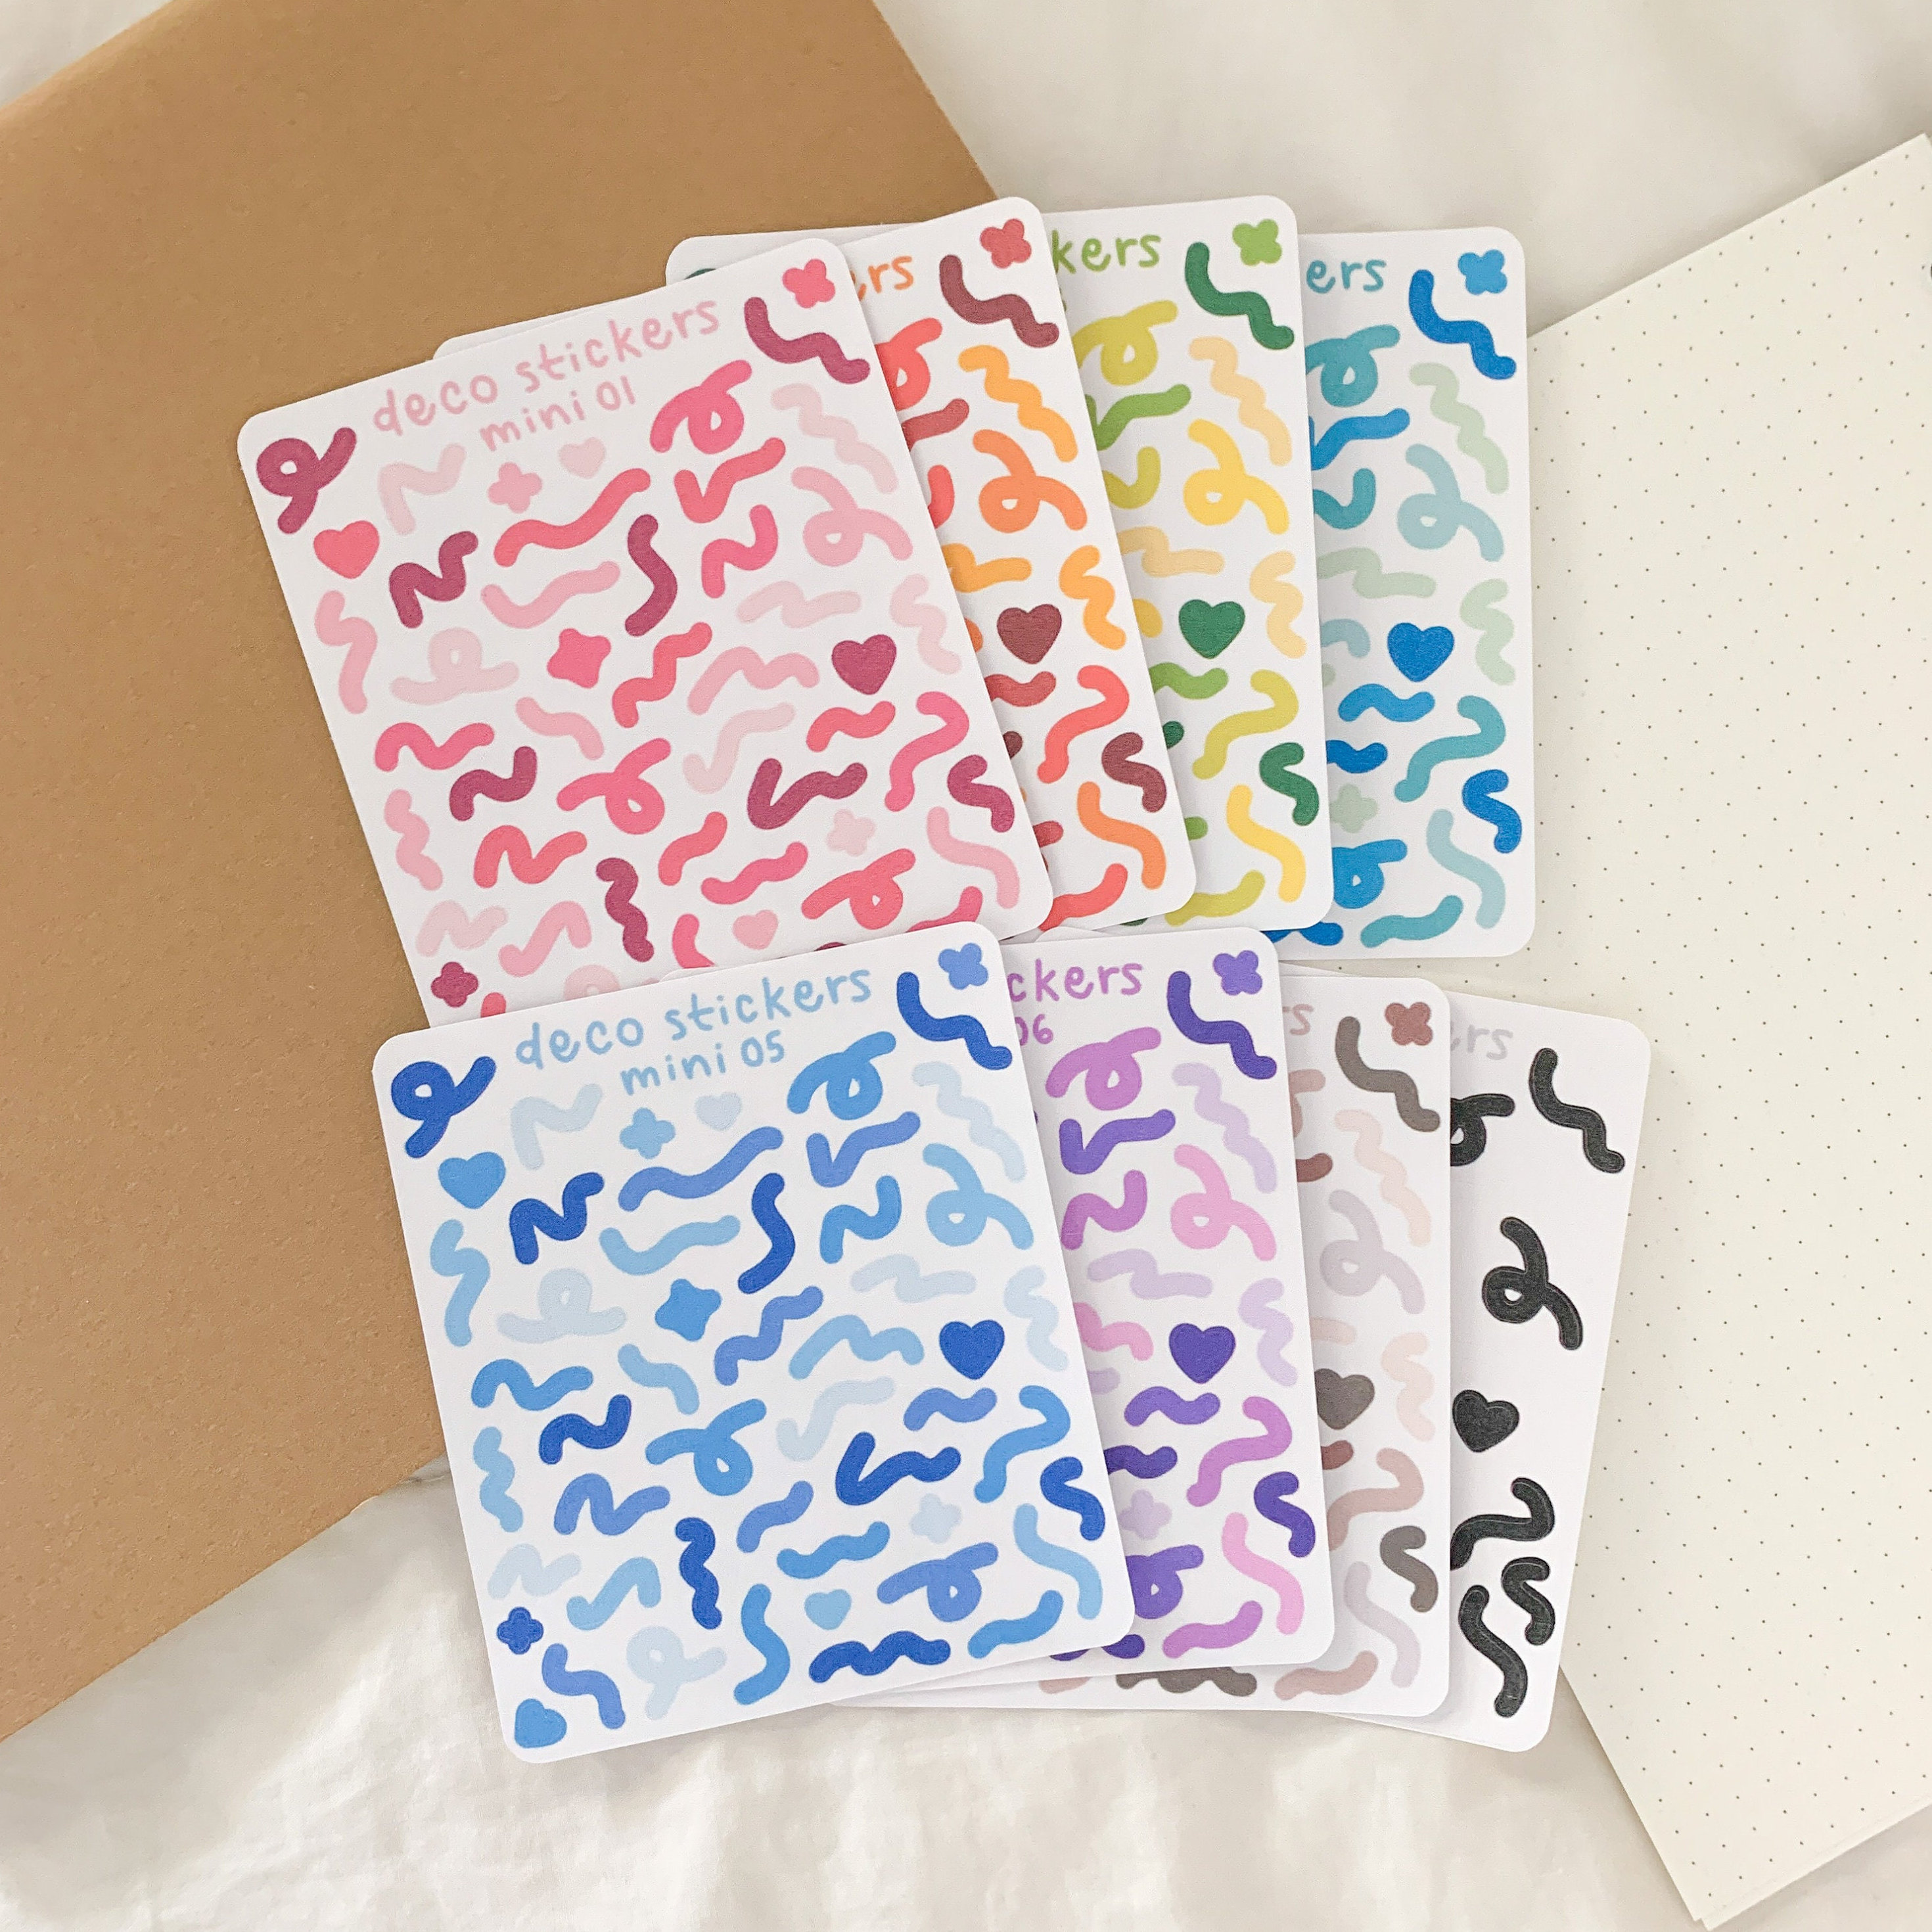 Kpop Deco Sticker, Mini Lace Frame Sticker, Korean Stationery, Polco  Toploader Journal Planner, Holographic Sticker, Kawaii Sticker Sheet 